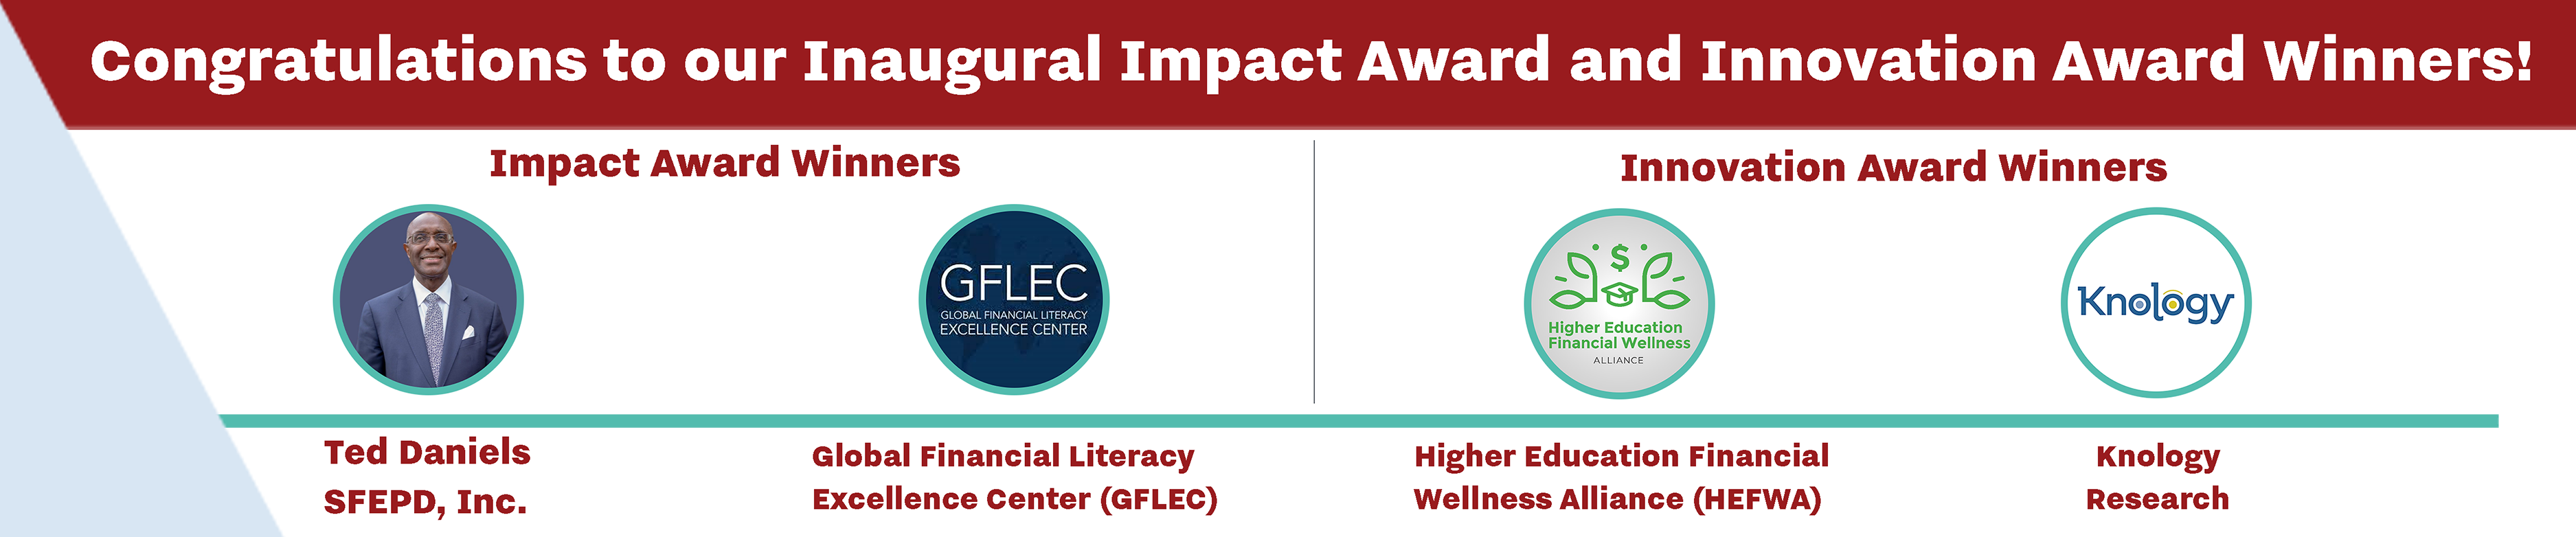 Inaugural Impact Award and Innovation Award winners